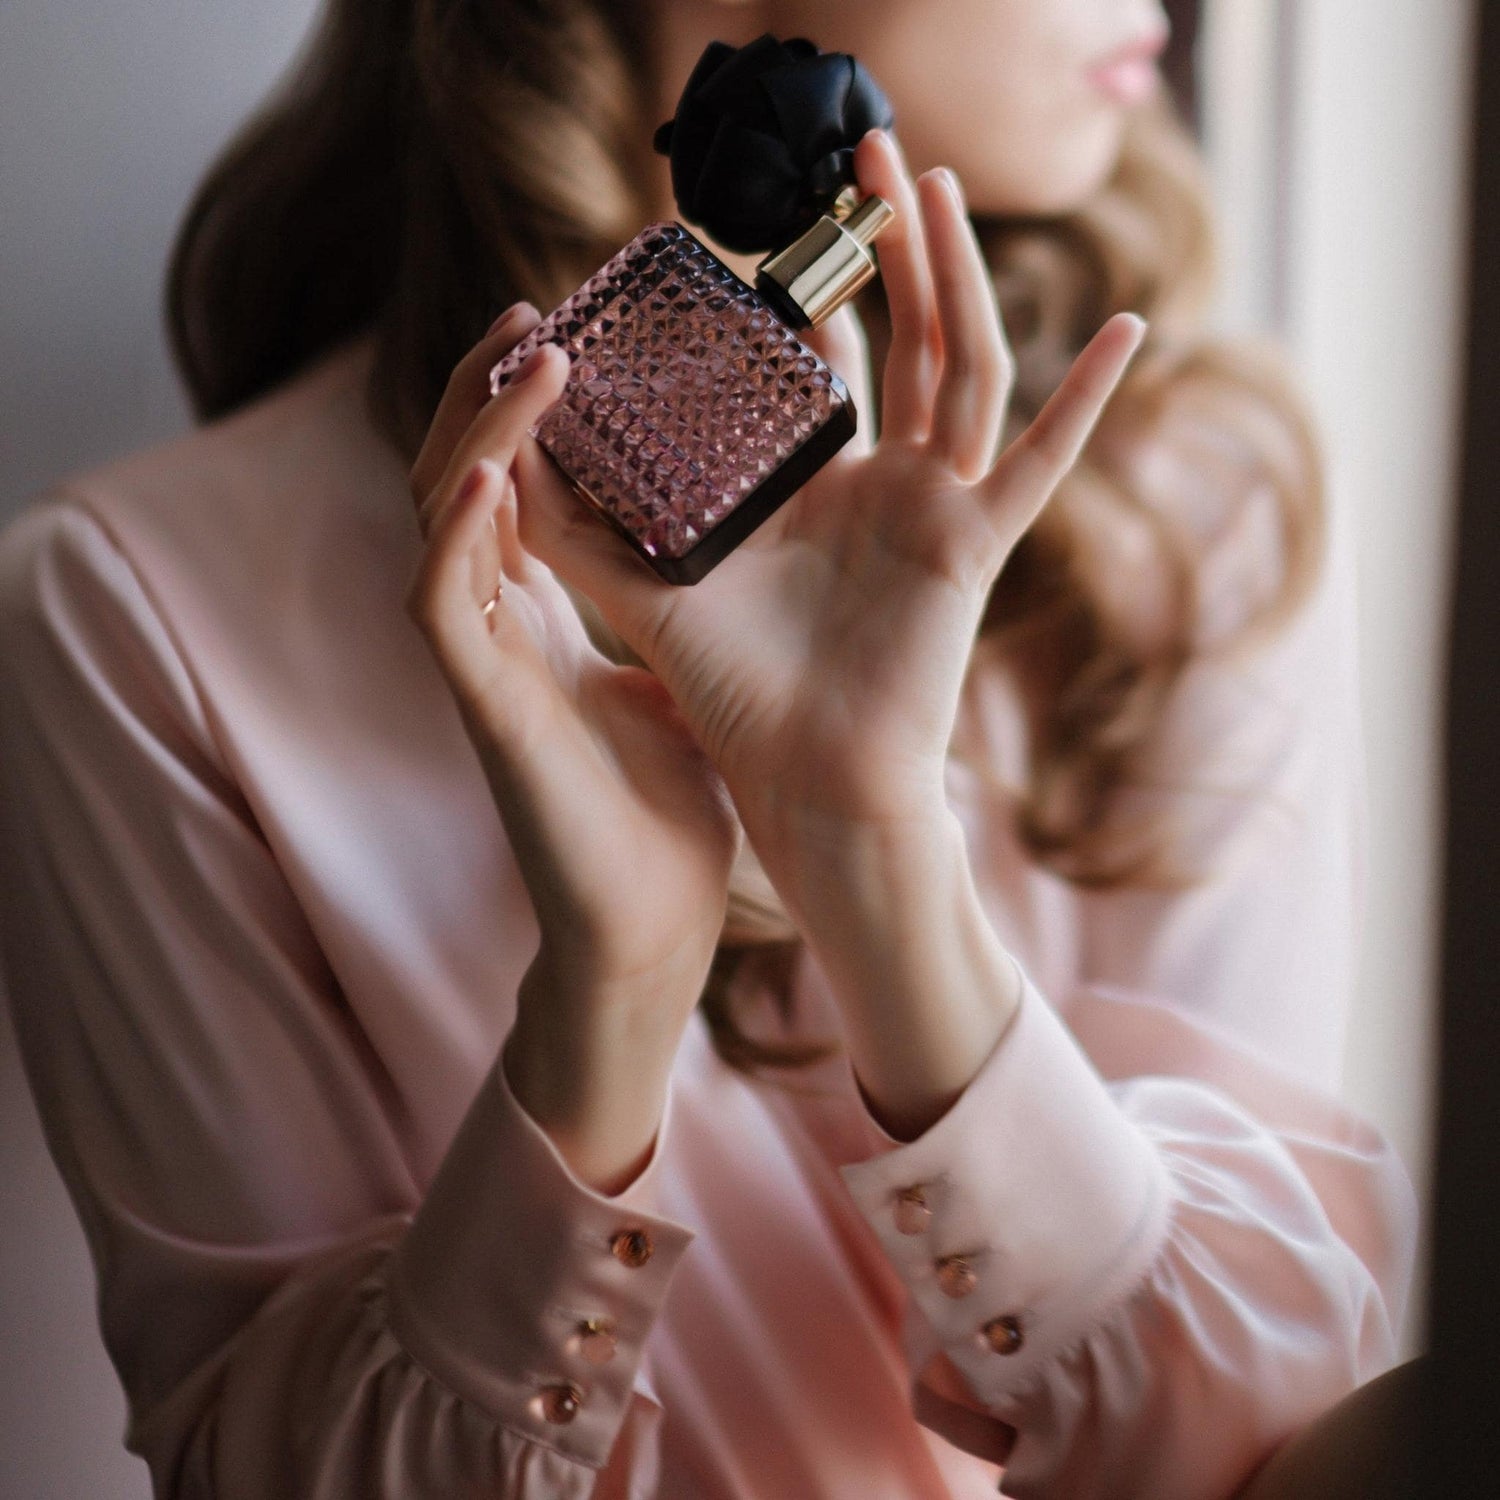 Woman in Pink Applying Perfume